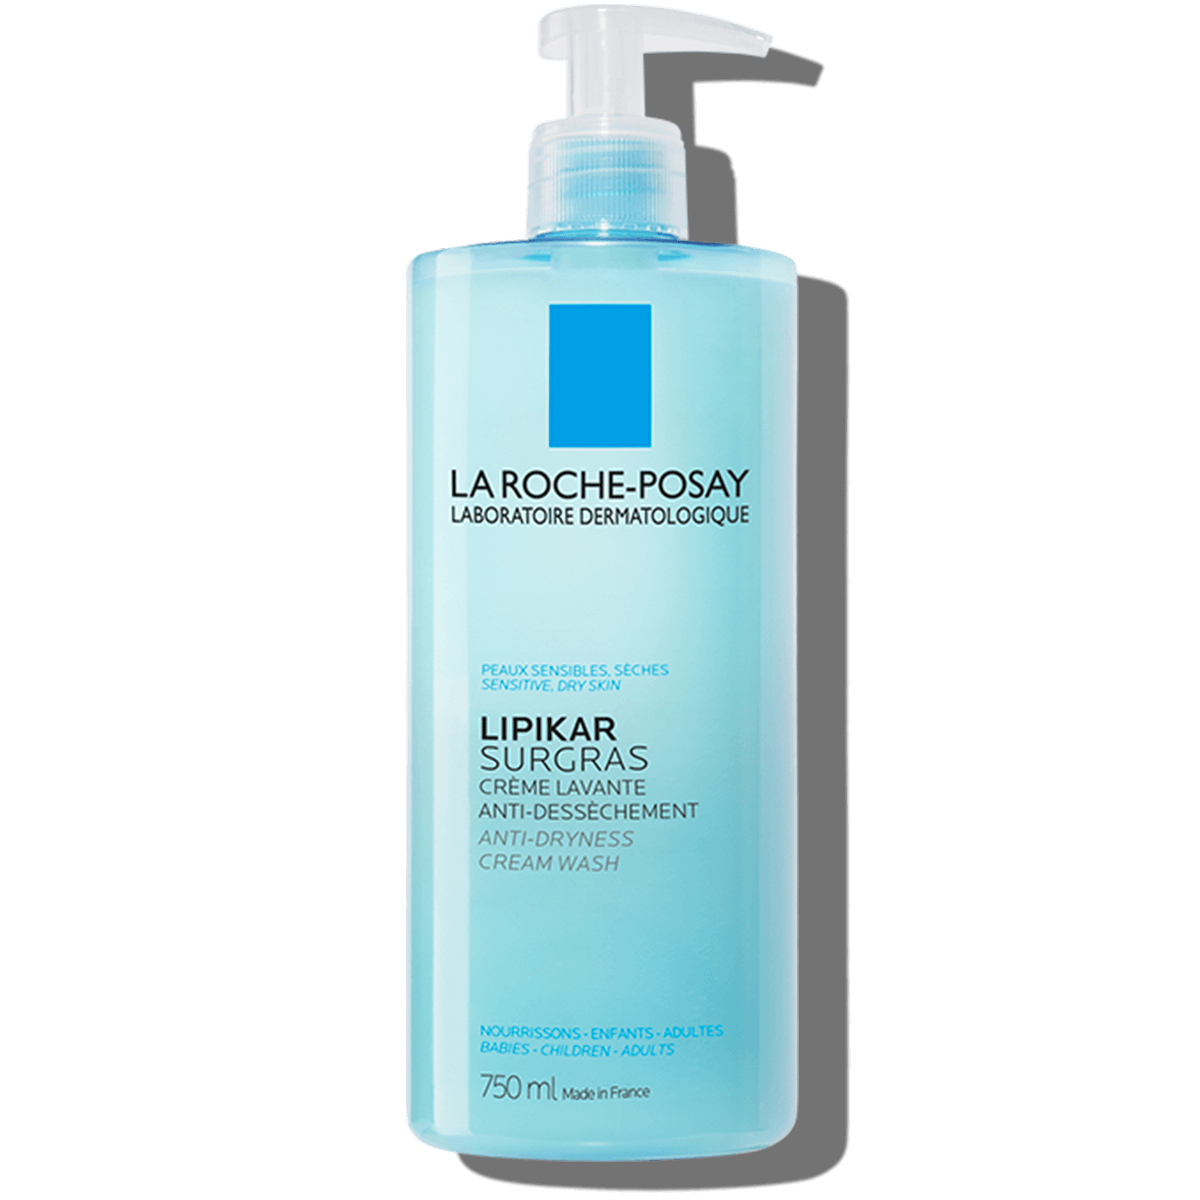 La Roche Posay ProductPage Eczema Lipikar Surgras 750ml 3337875551250 